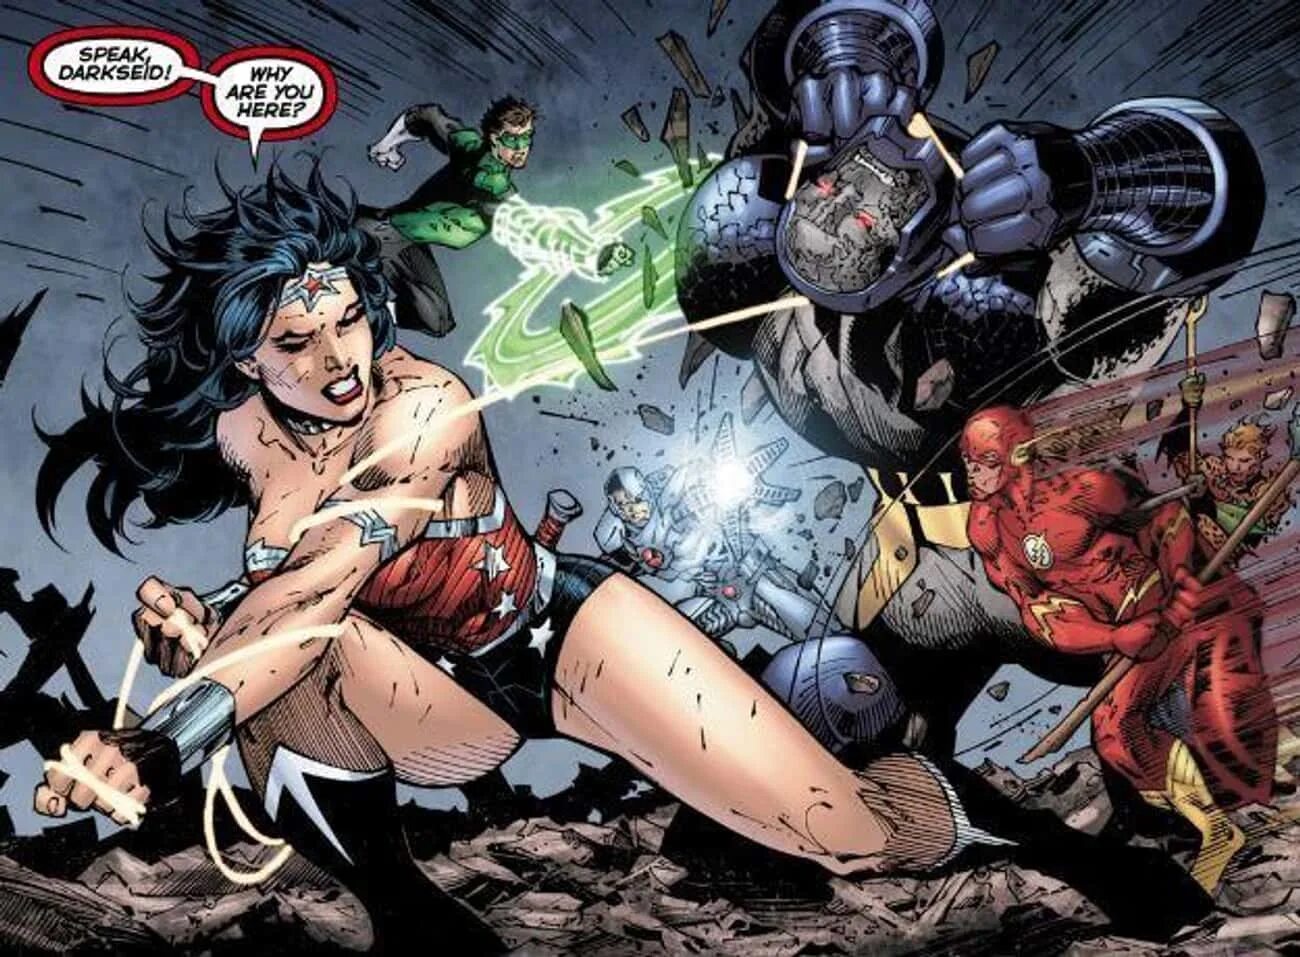 Kill the justice league отзывы. Чудо женщина Дарксайда. DC New 52 Wonder woman комиксы. Чудо женщина против ларкчайла.